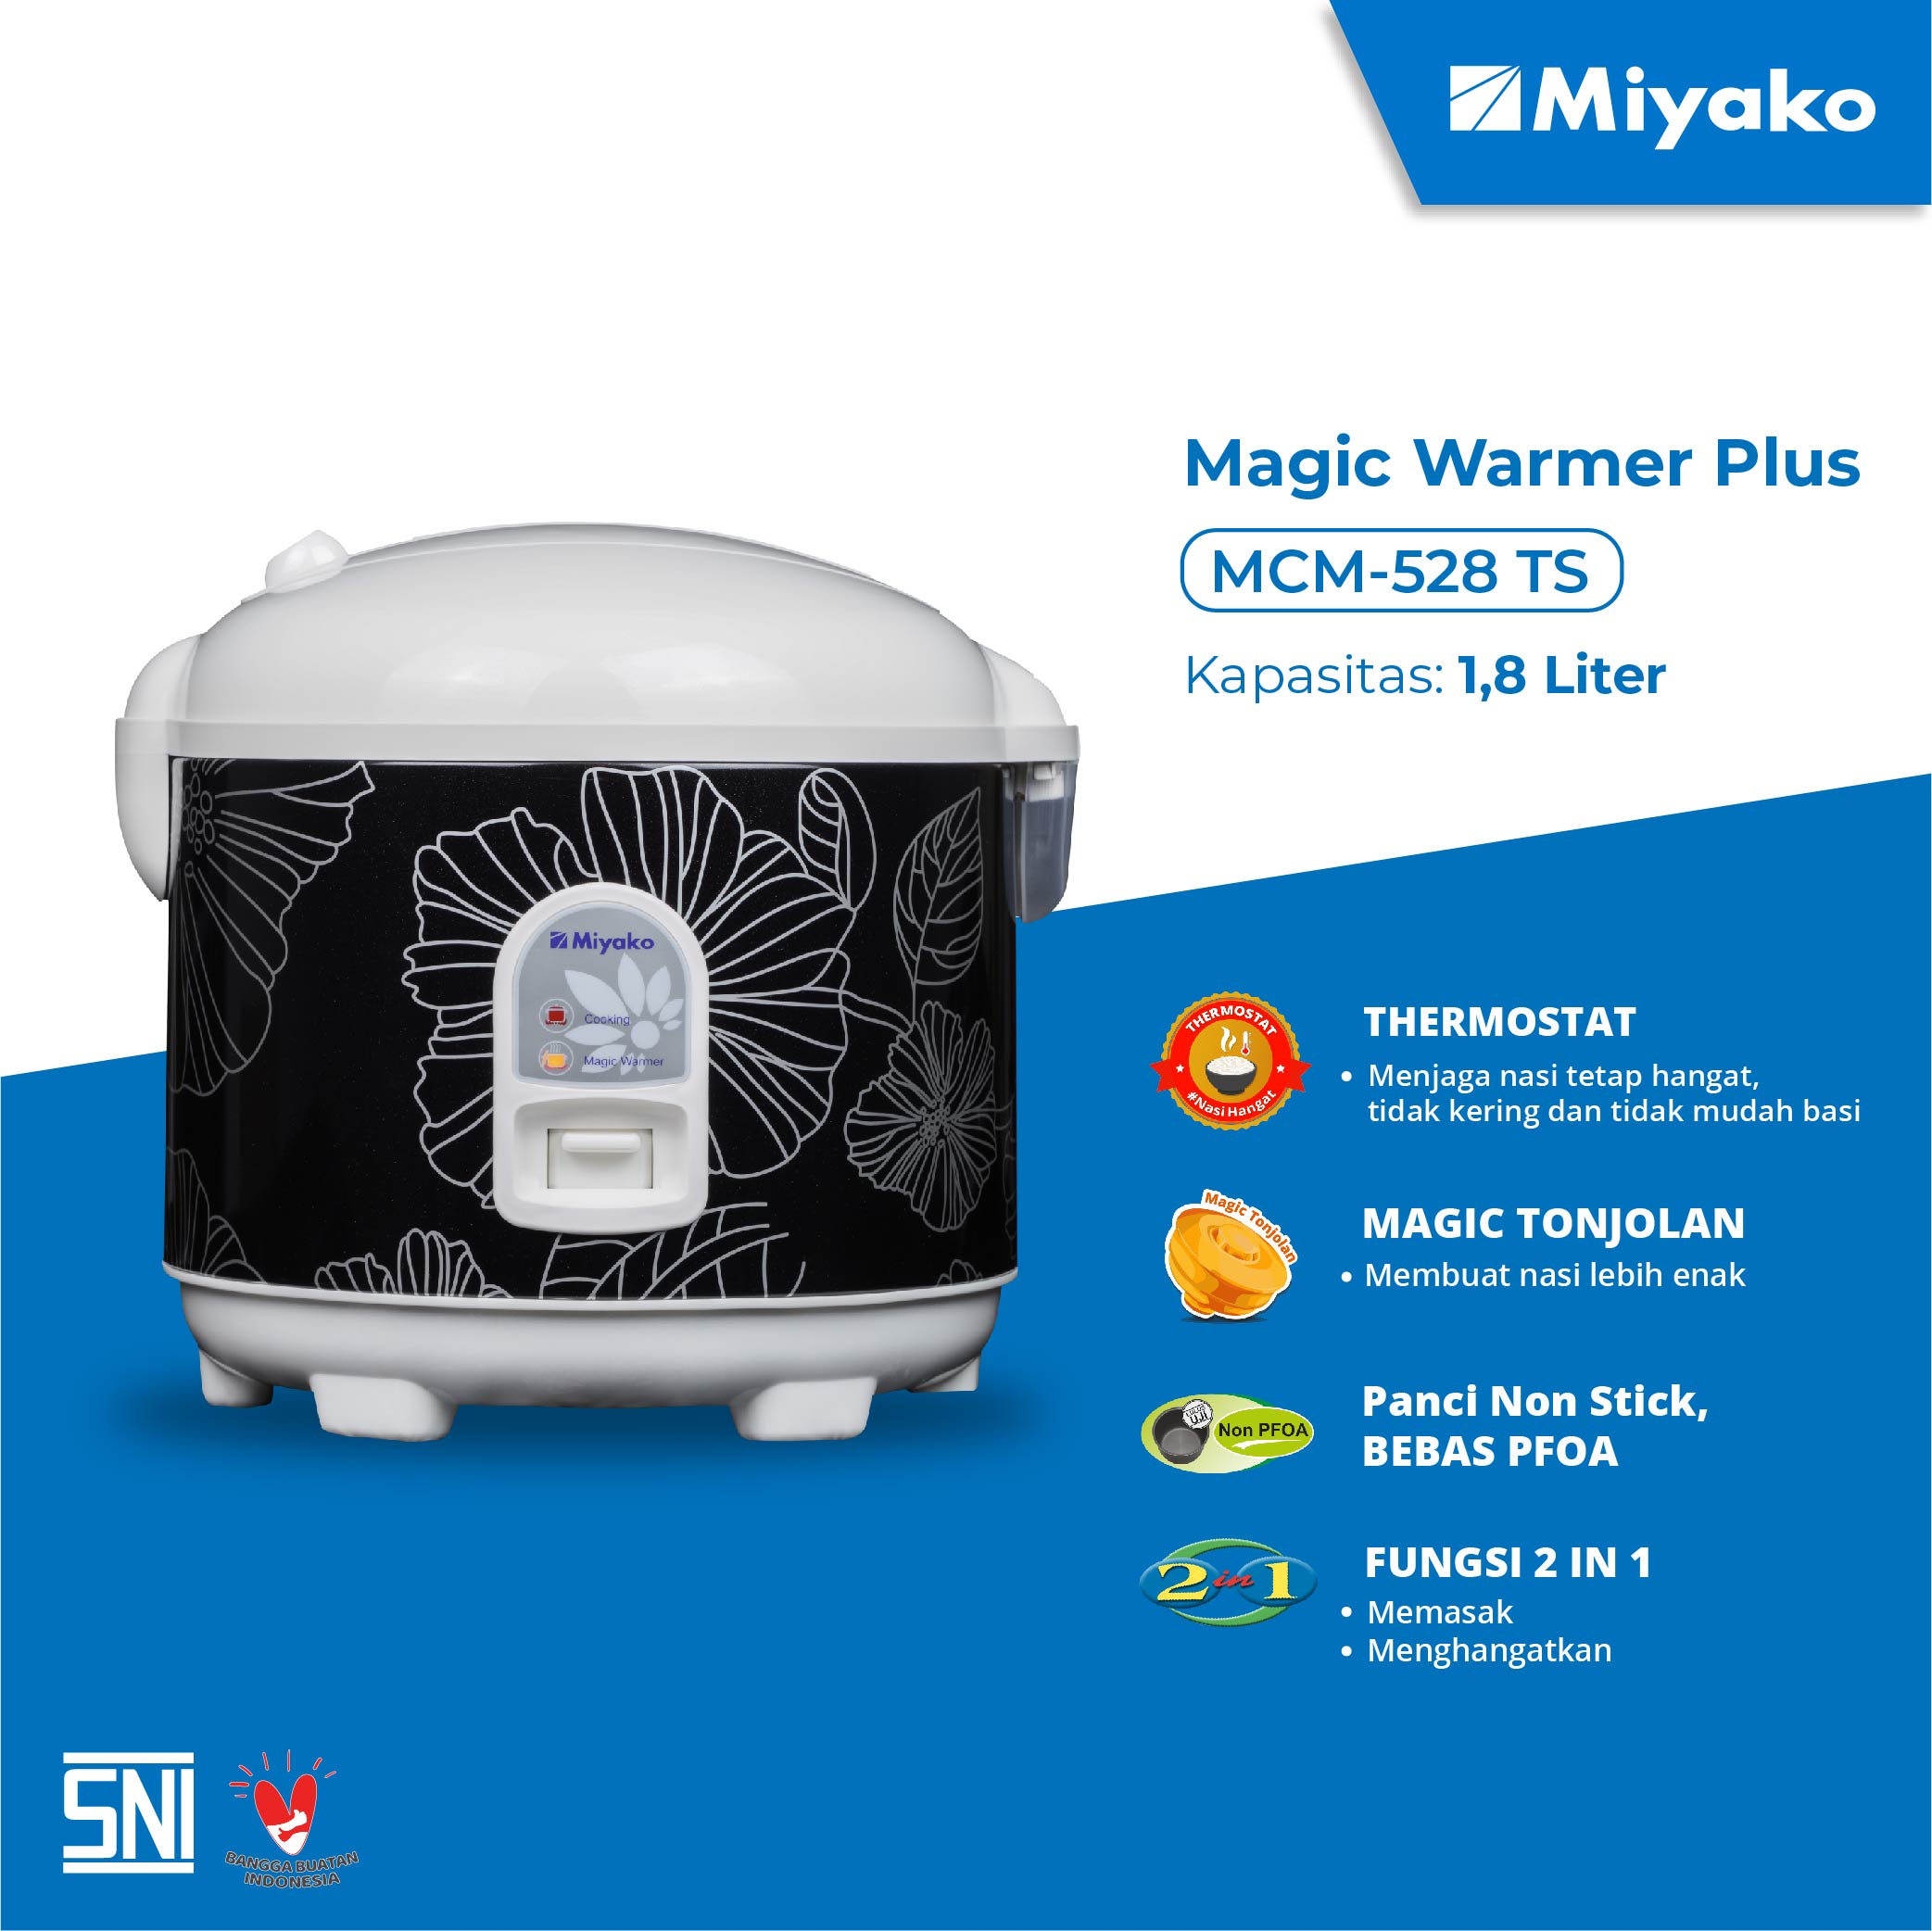 Magic Warmer Plus Miyako MCM-528 TS